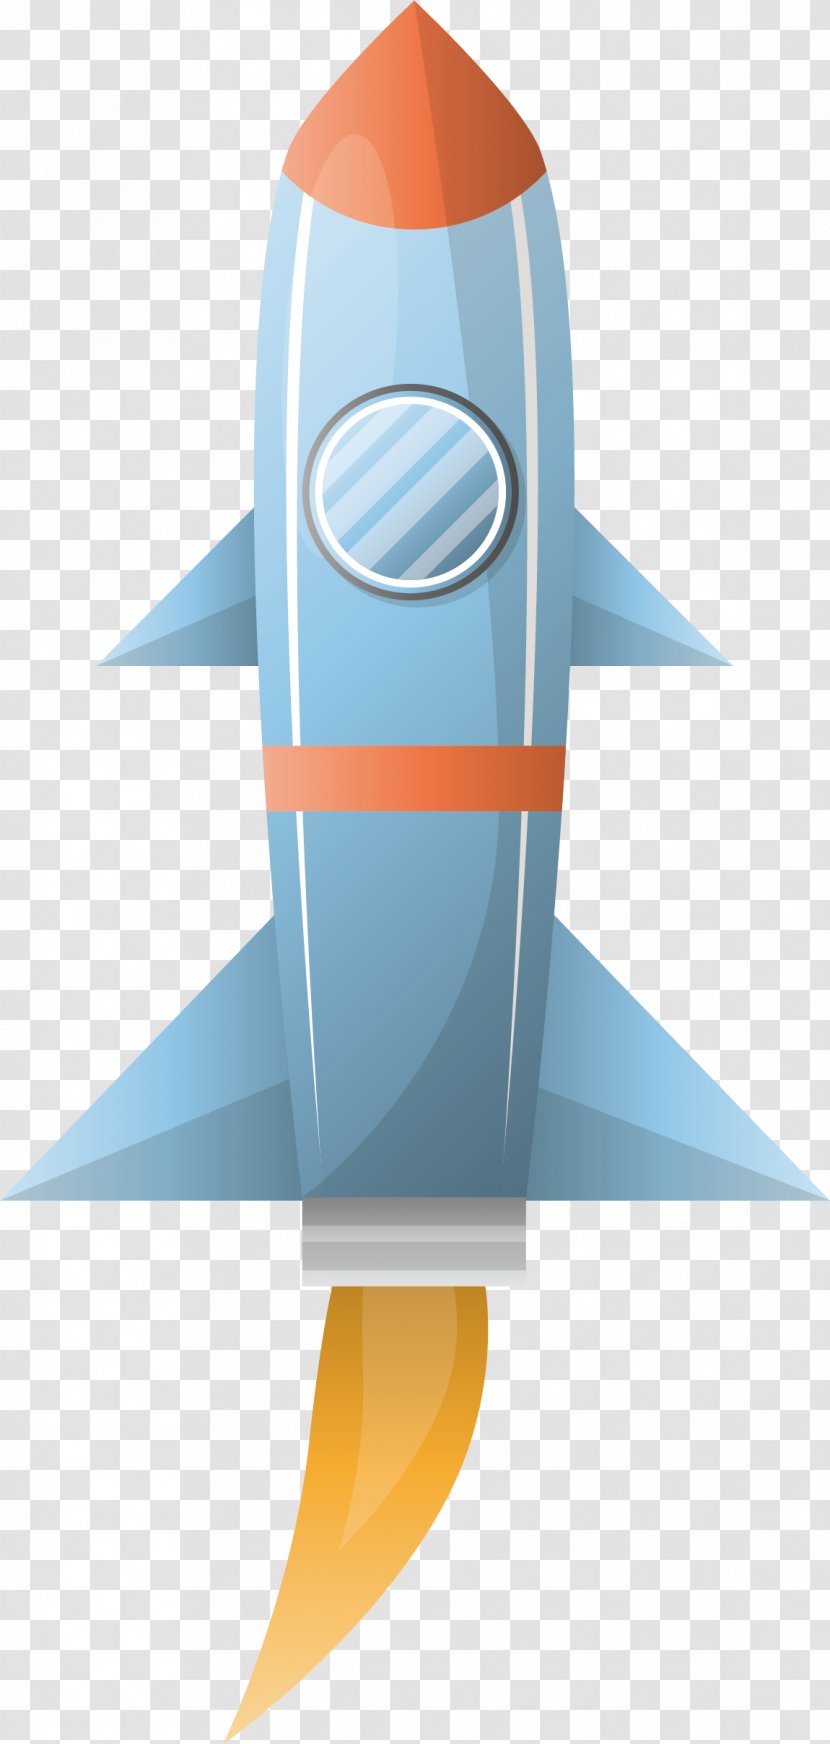 Rocket Illustration - Spacecraft - Science Fiction Ship Transparent PNG